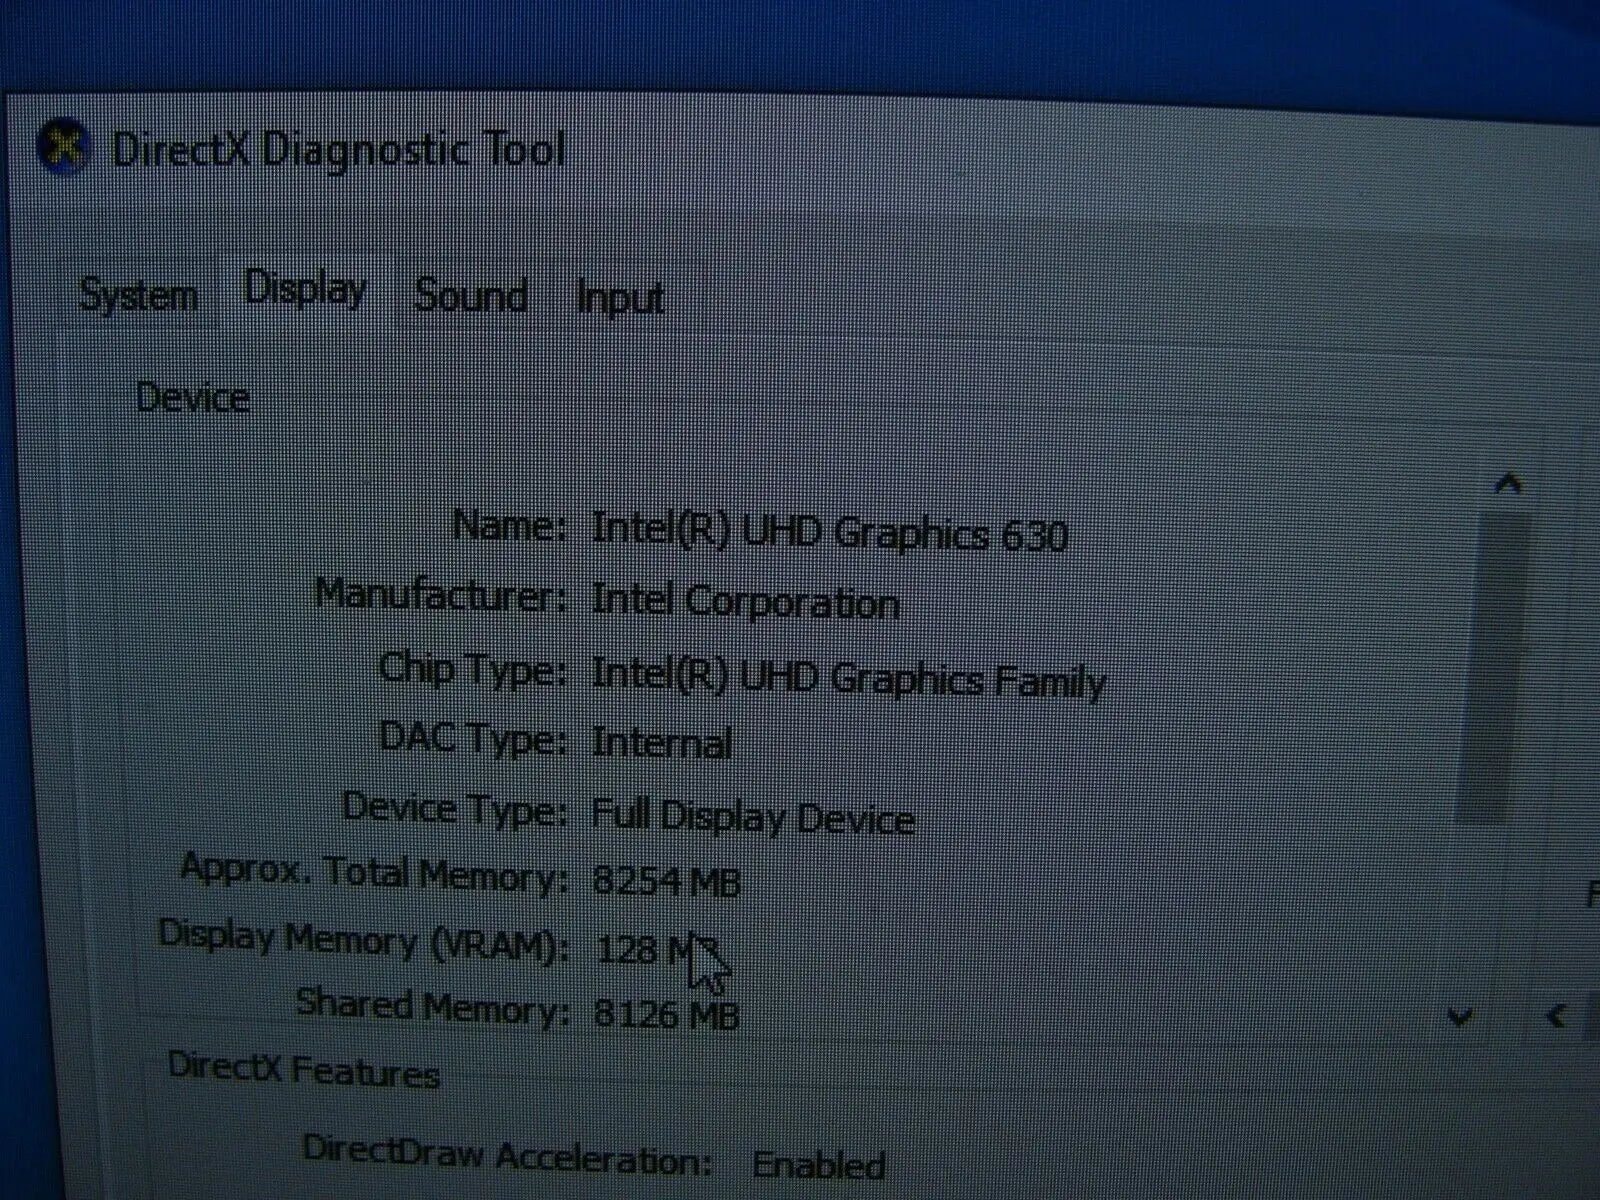 Powerful Lenovo ThinkCentre M720q Intel Core i5-8400T 16GB RAM 256GB SSD W10P